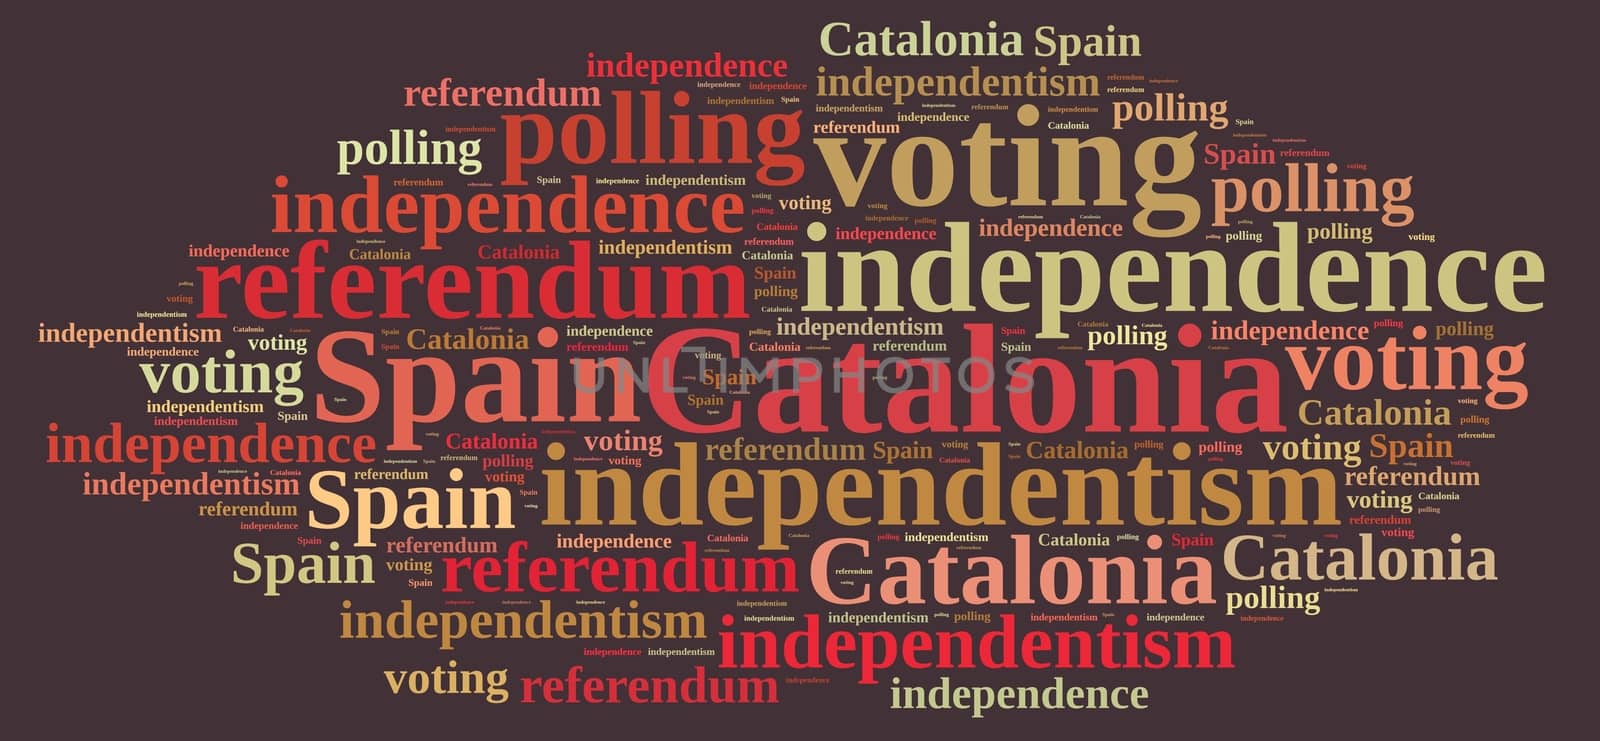 Referendum in Catalonia, Spain. by CreativePhotoSpain